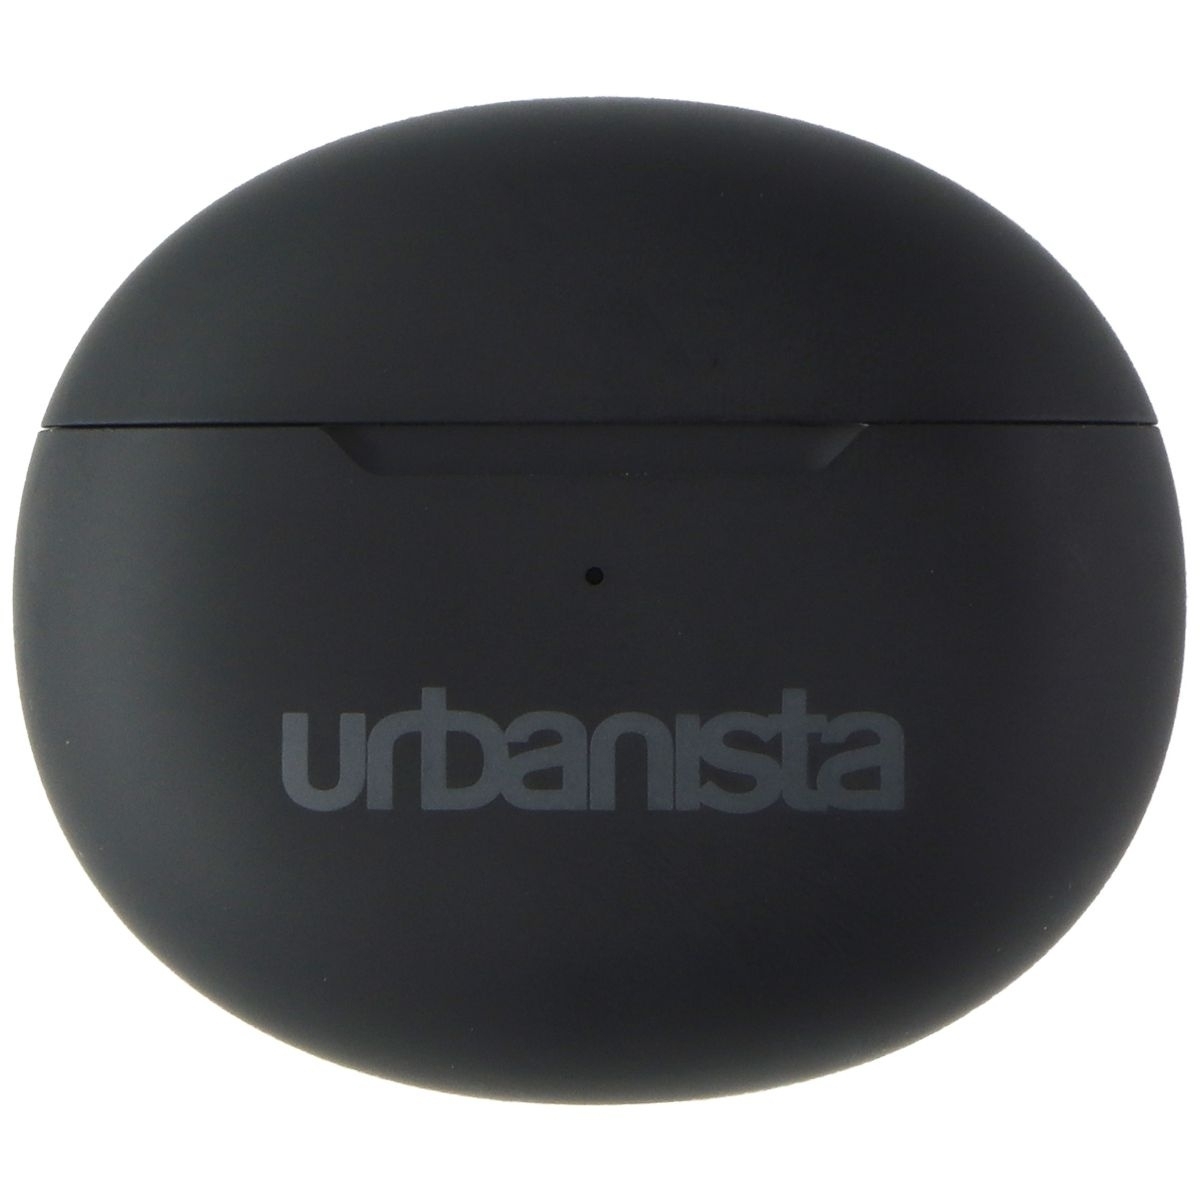 Urbanista Austin True Wireless Earbuds With Built-In Microphone - Midnight Black